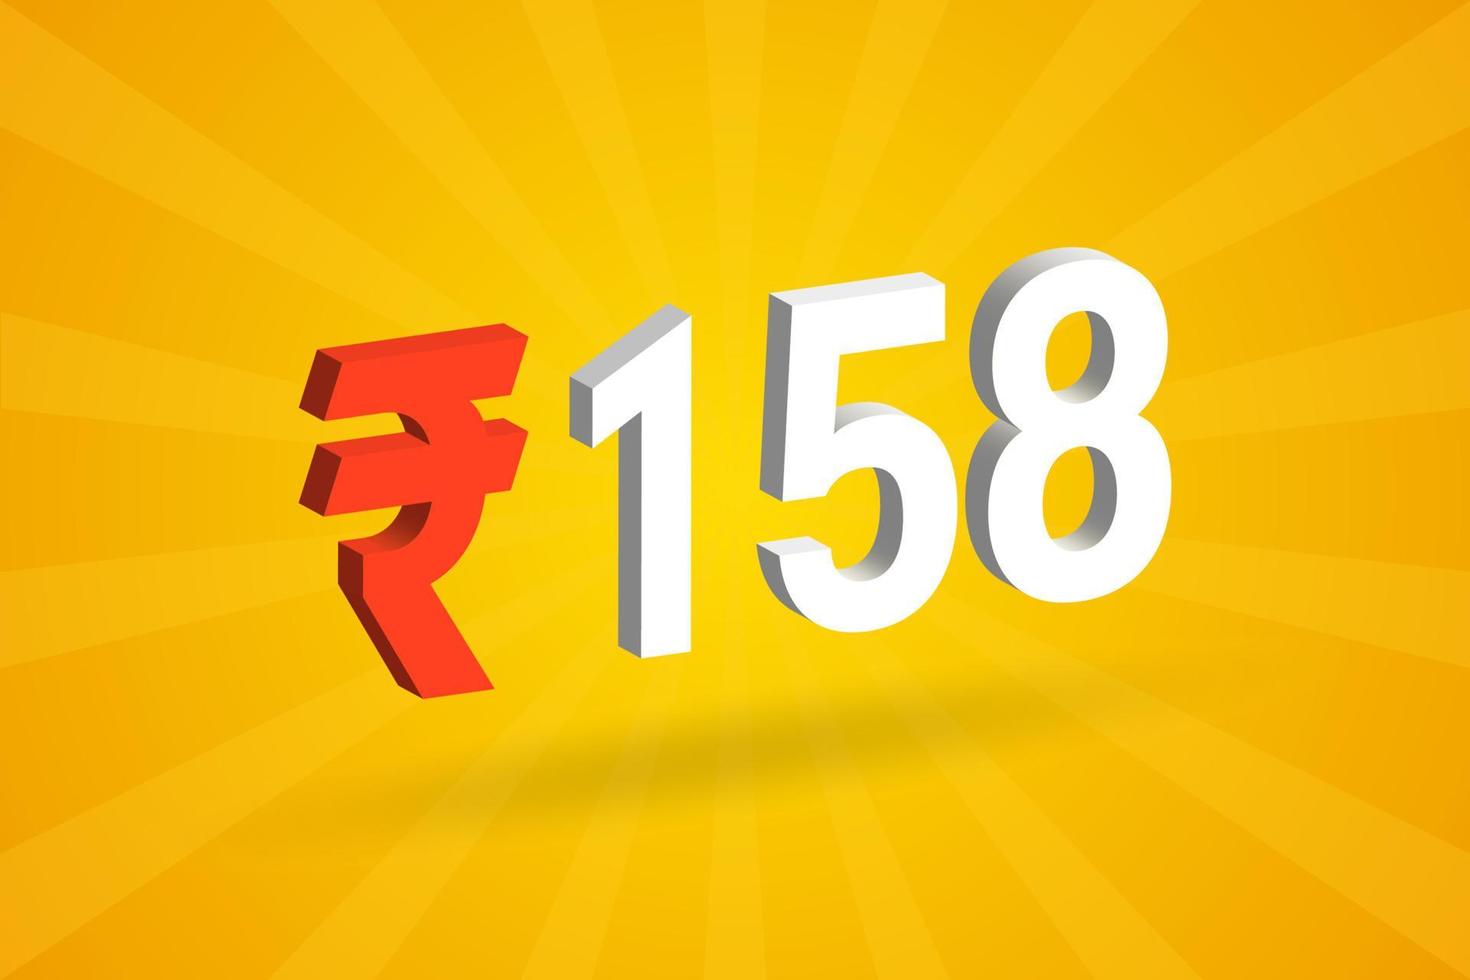 158 rupias símbolo 3d imagen vectorial de texto en negrita. 3d 158 rupia india signo de moneda ilustración vectorial vector